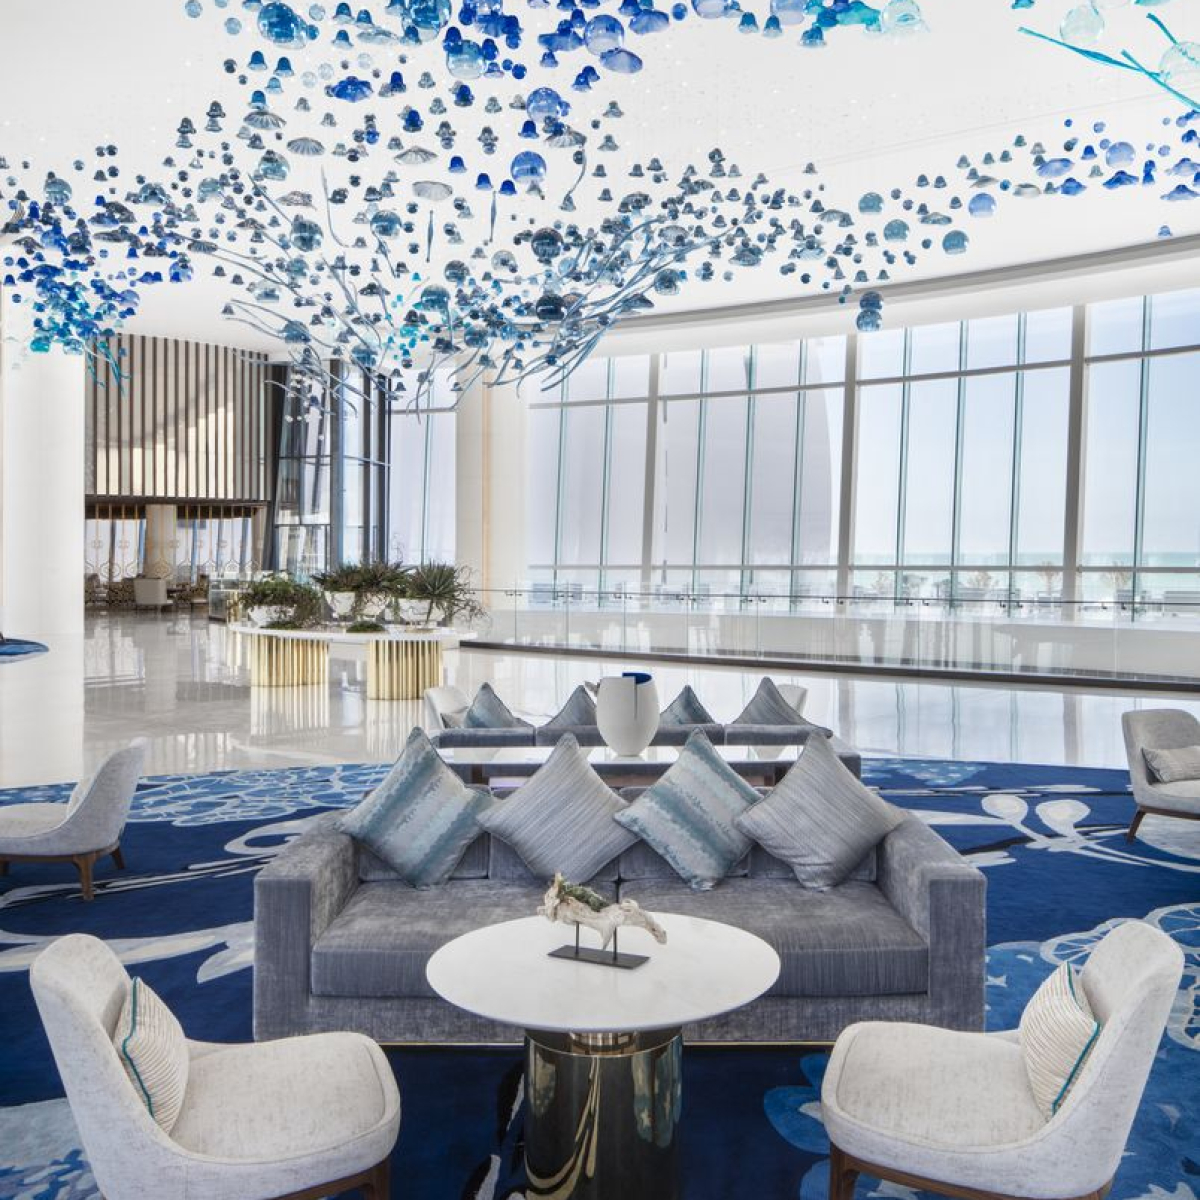 Main lobby with hand-blown glass jellyfish